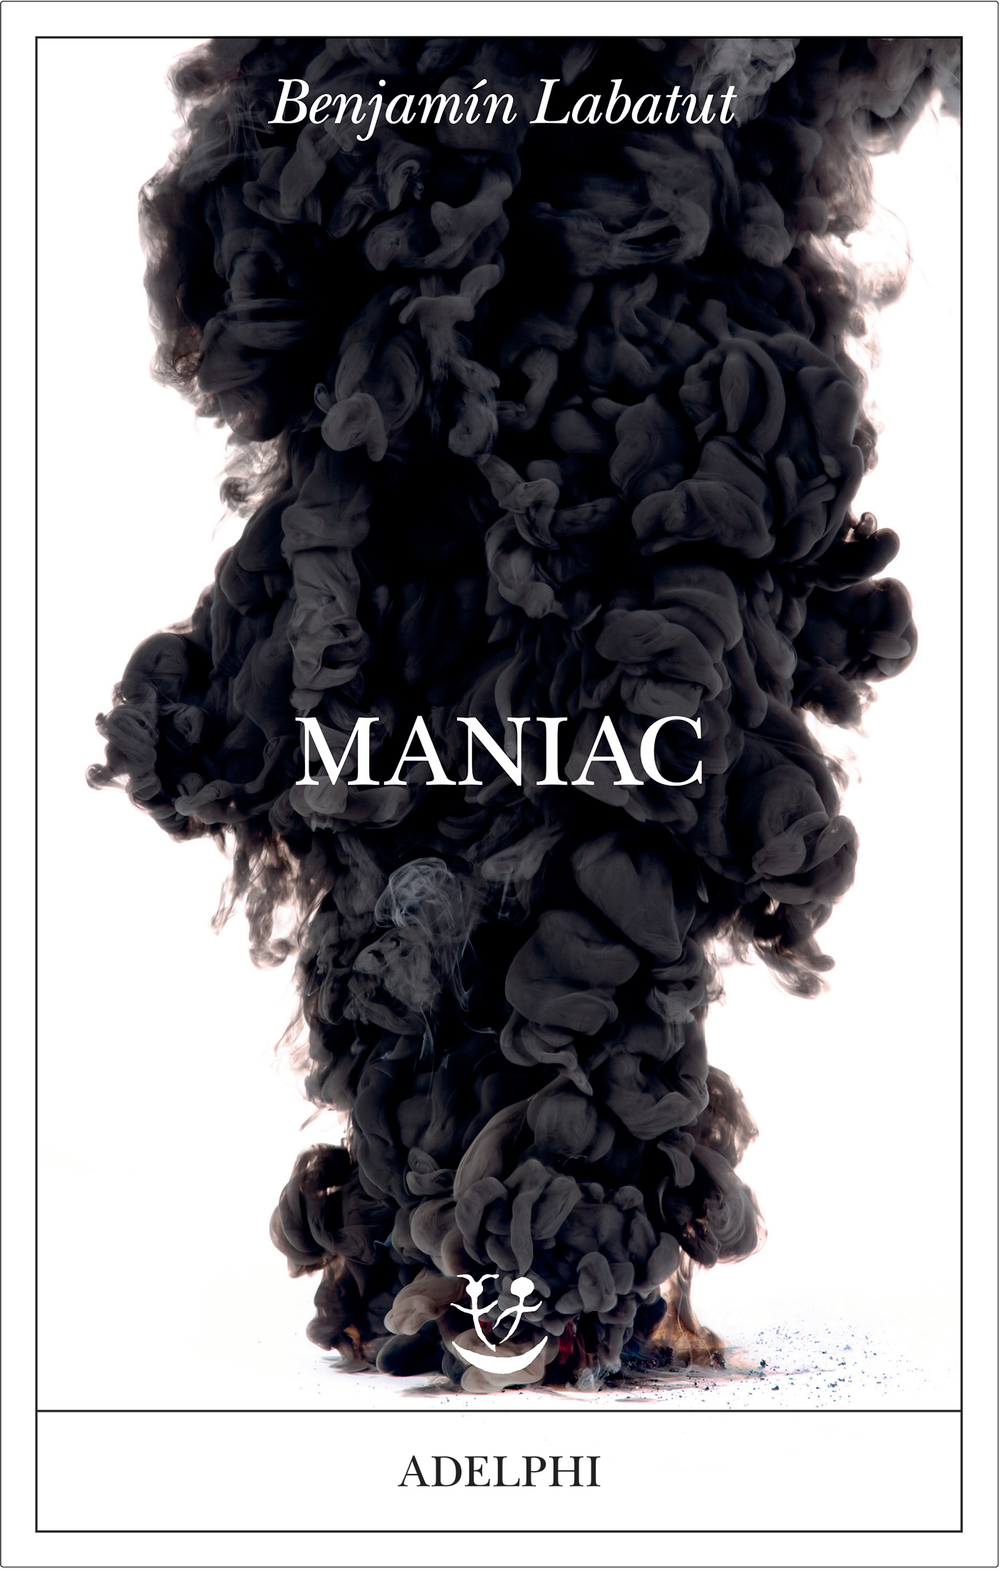 Benjamín Labatut's forthcoming novel The MANIAC has been named a